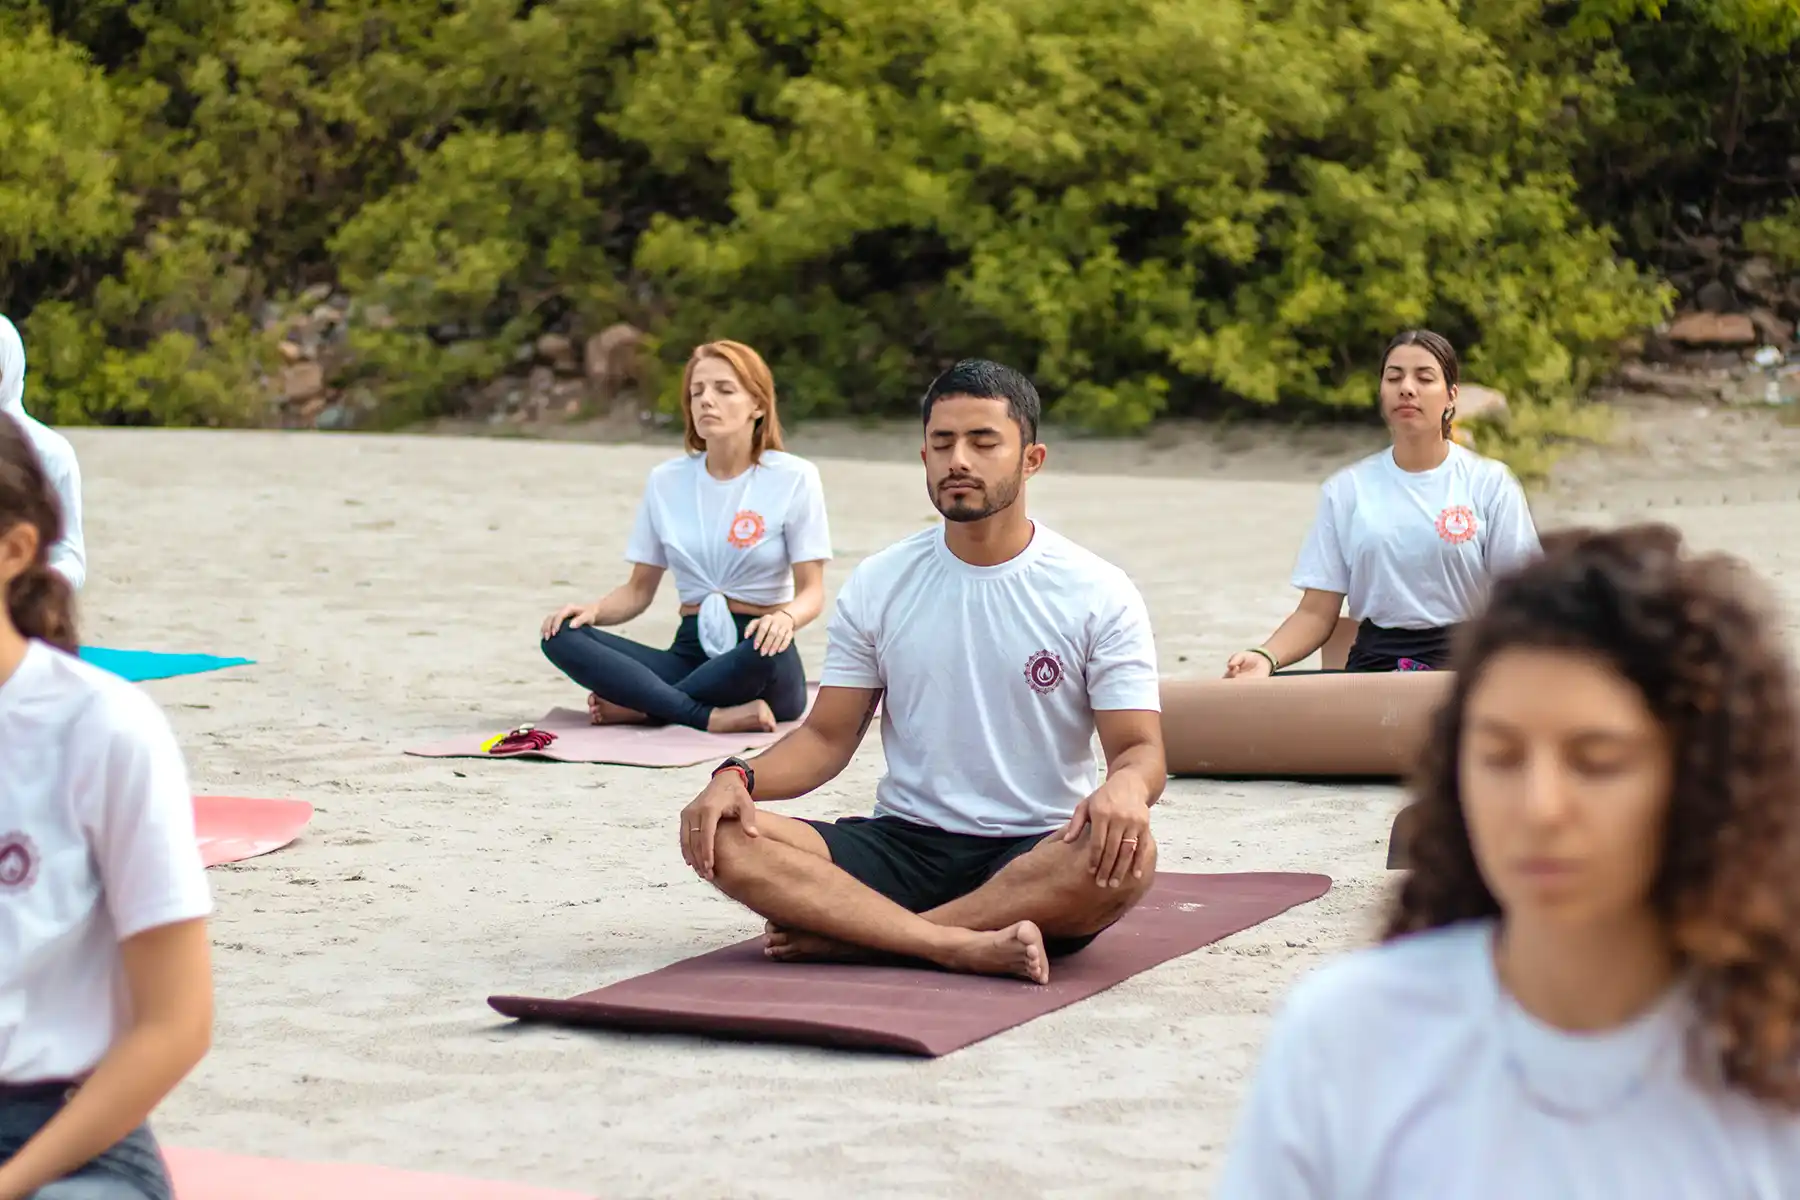 yoga-training-courses-in-rishikesh-india